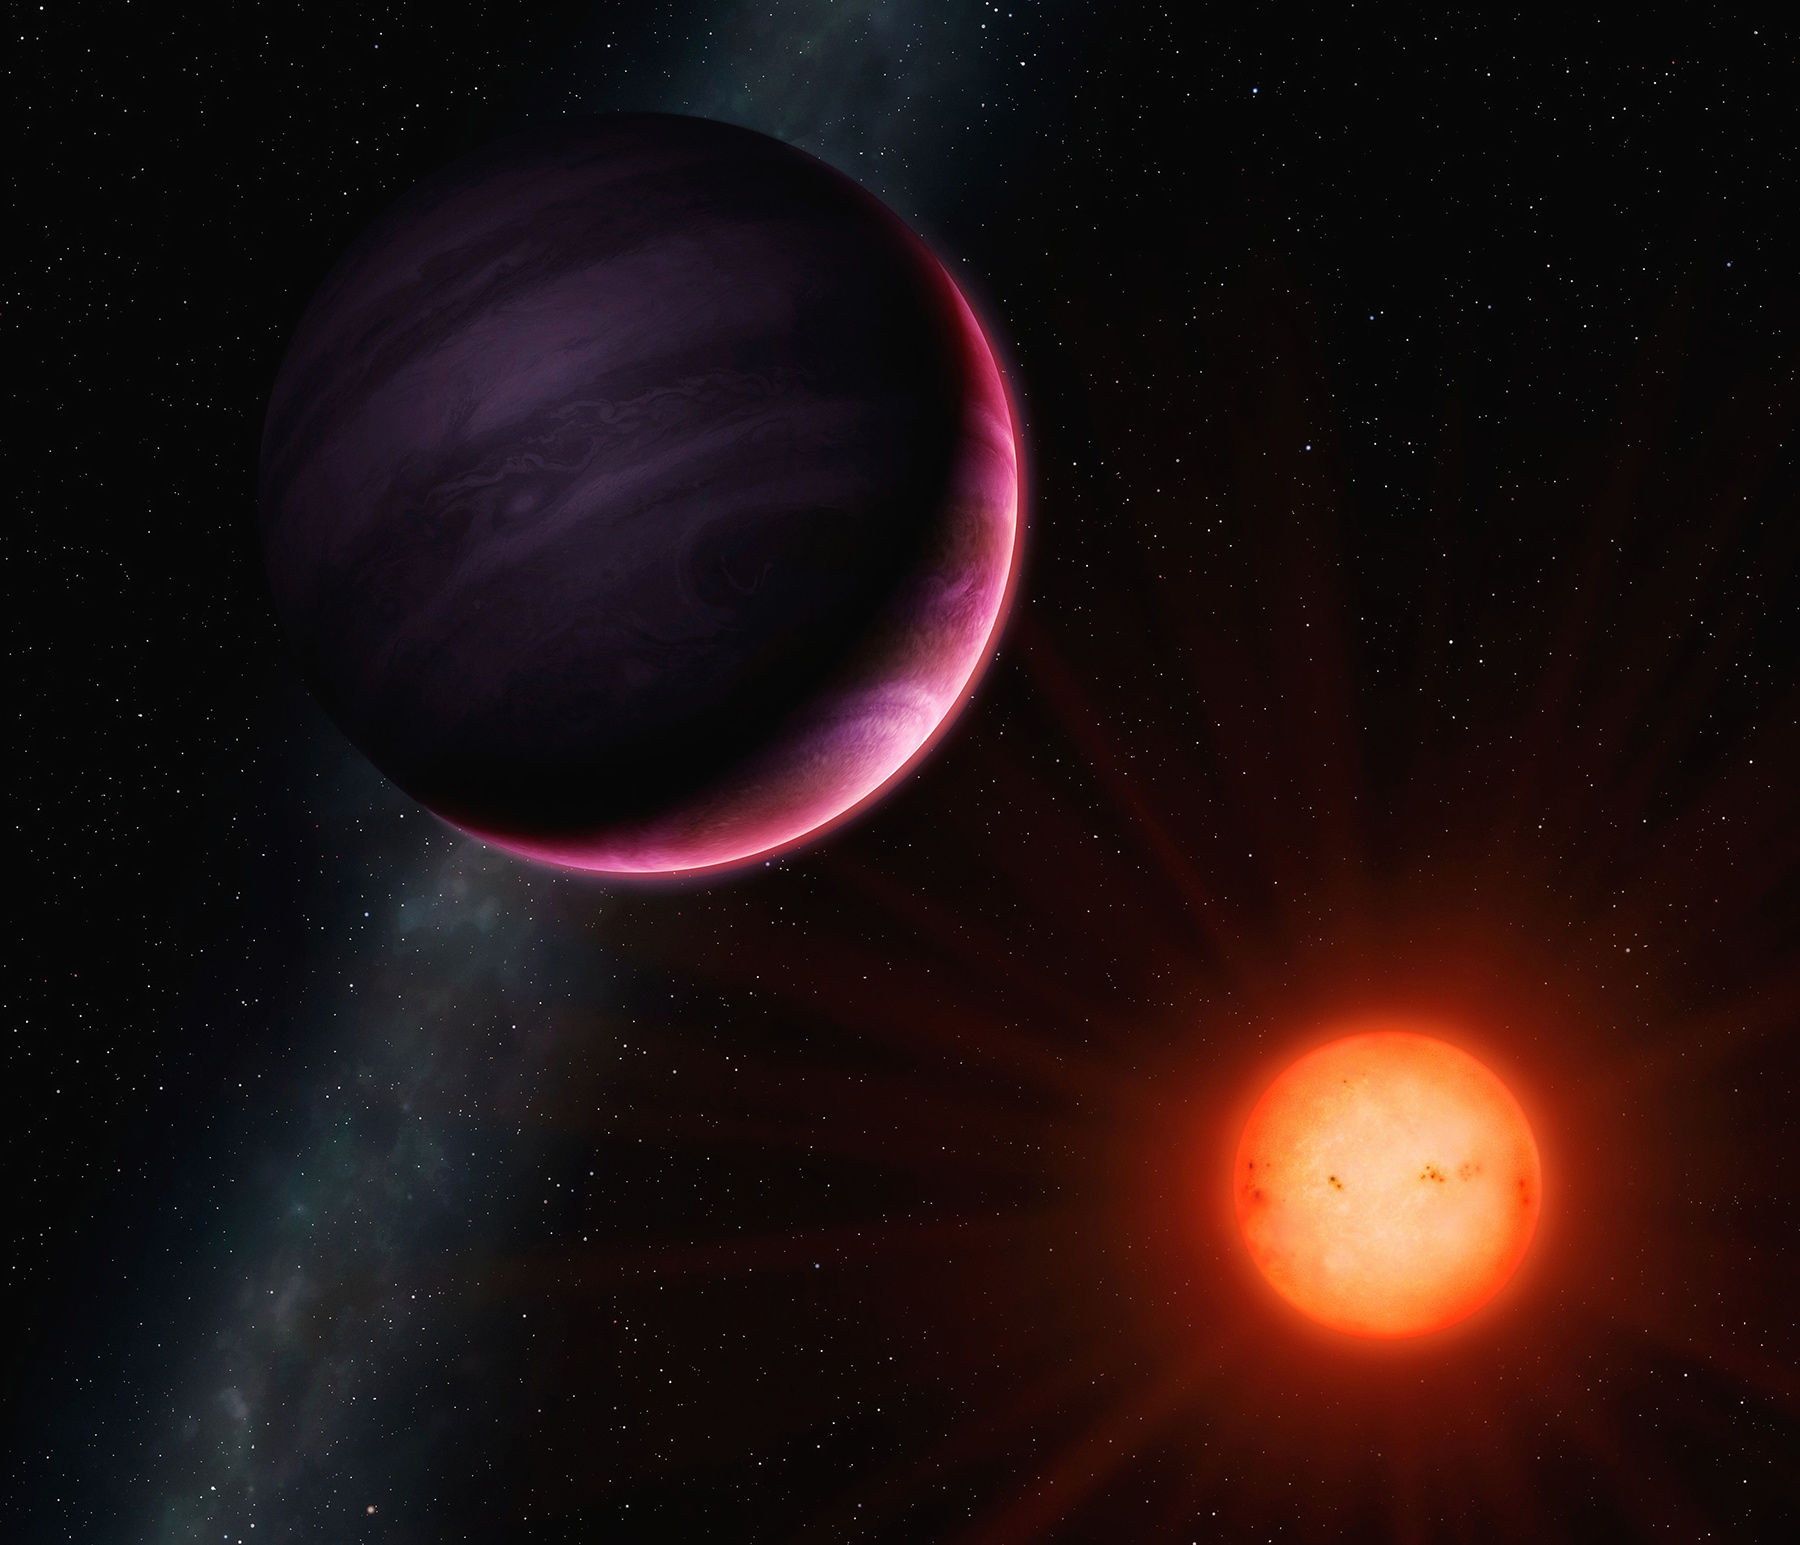 Artwork depicting a hot exoplanet orbiting a red dwarf star. Credit: University of Warwick/Mark Garlick